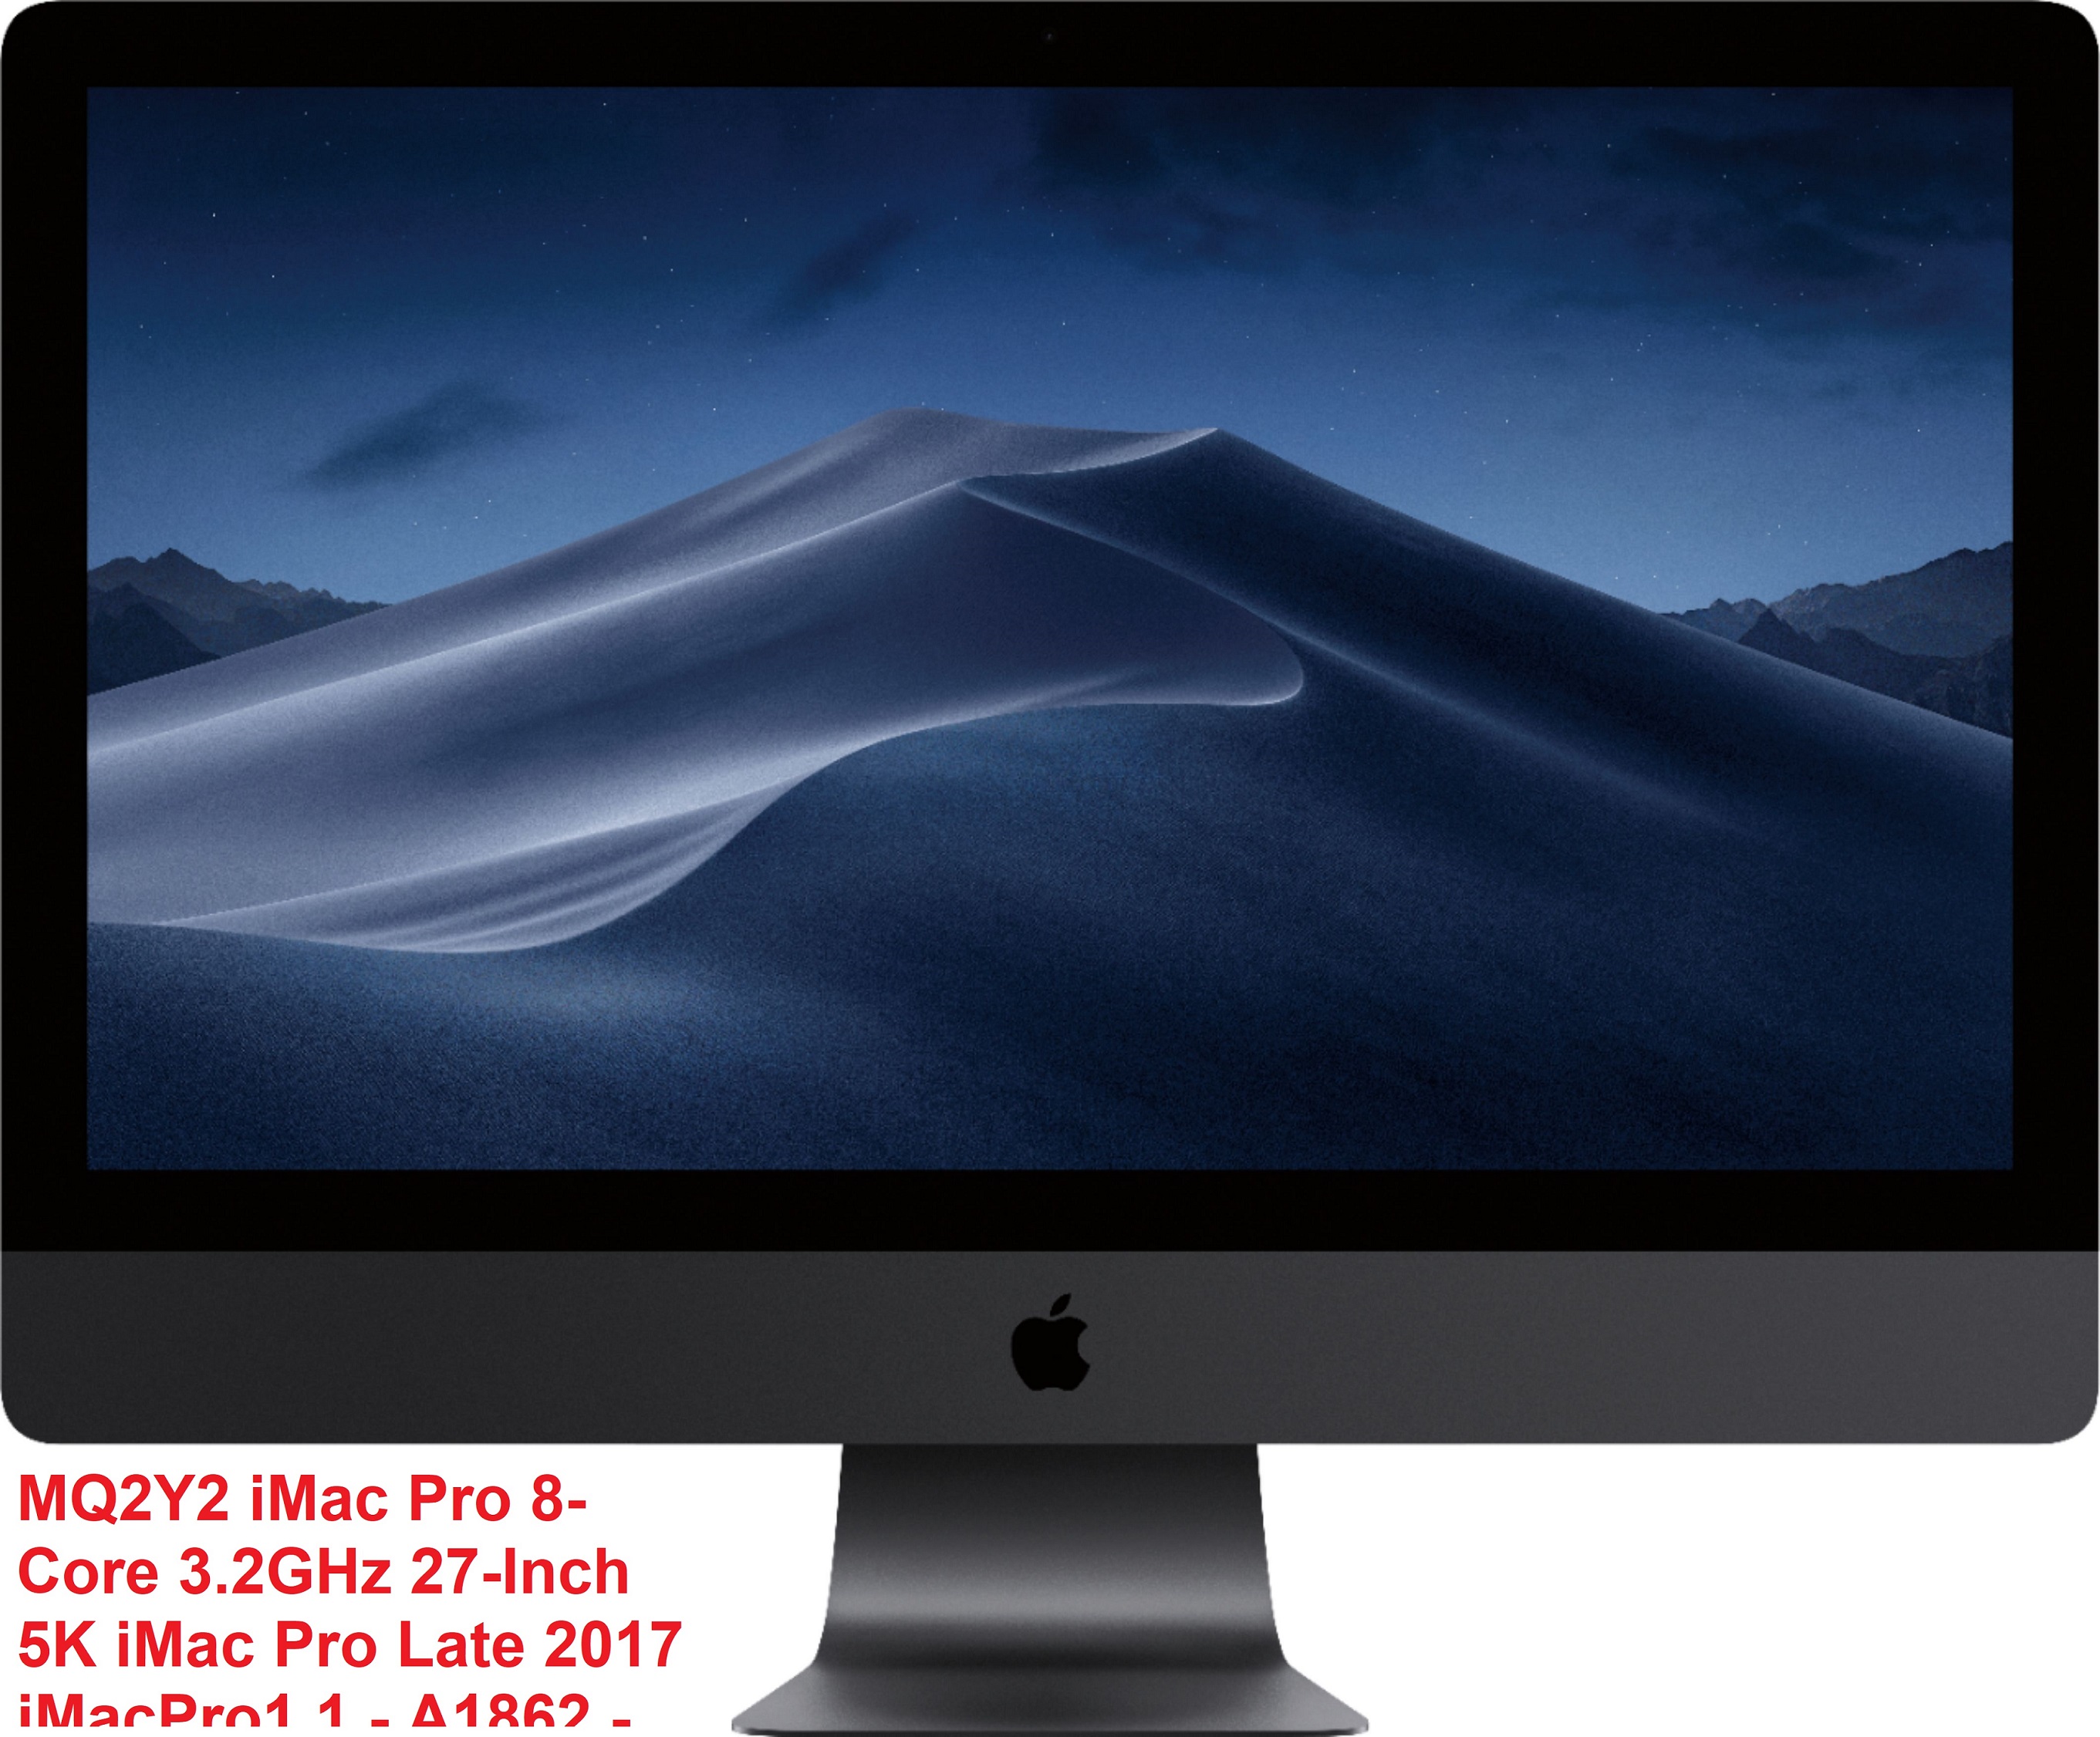 MQ2Y2 iMac Pro 8-Core 3.2GHz 27-Inch 5K iMac Pro Late 2017  iMacPro1,1 - A1862 - 3144